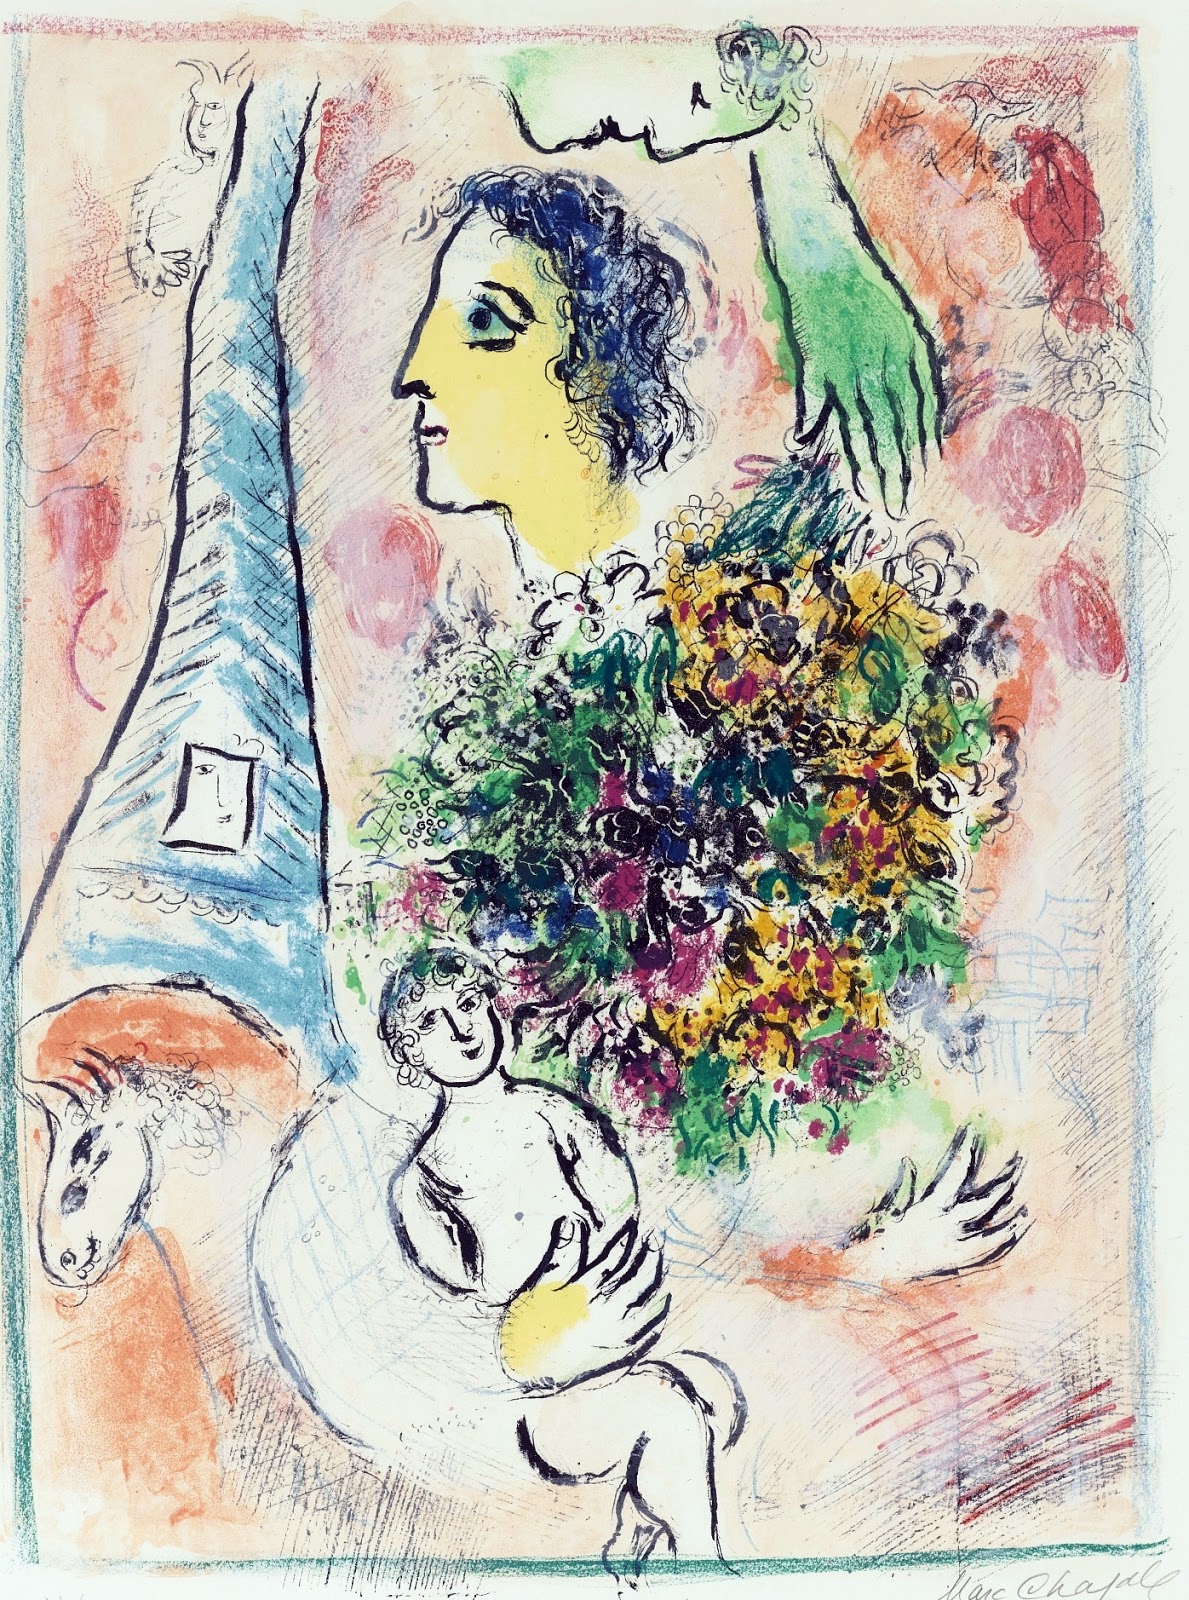 Marc+Chagall-1887-1985 (315).jpg